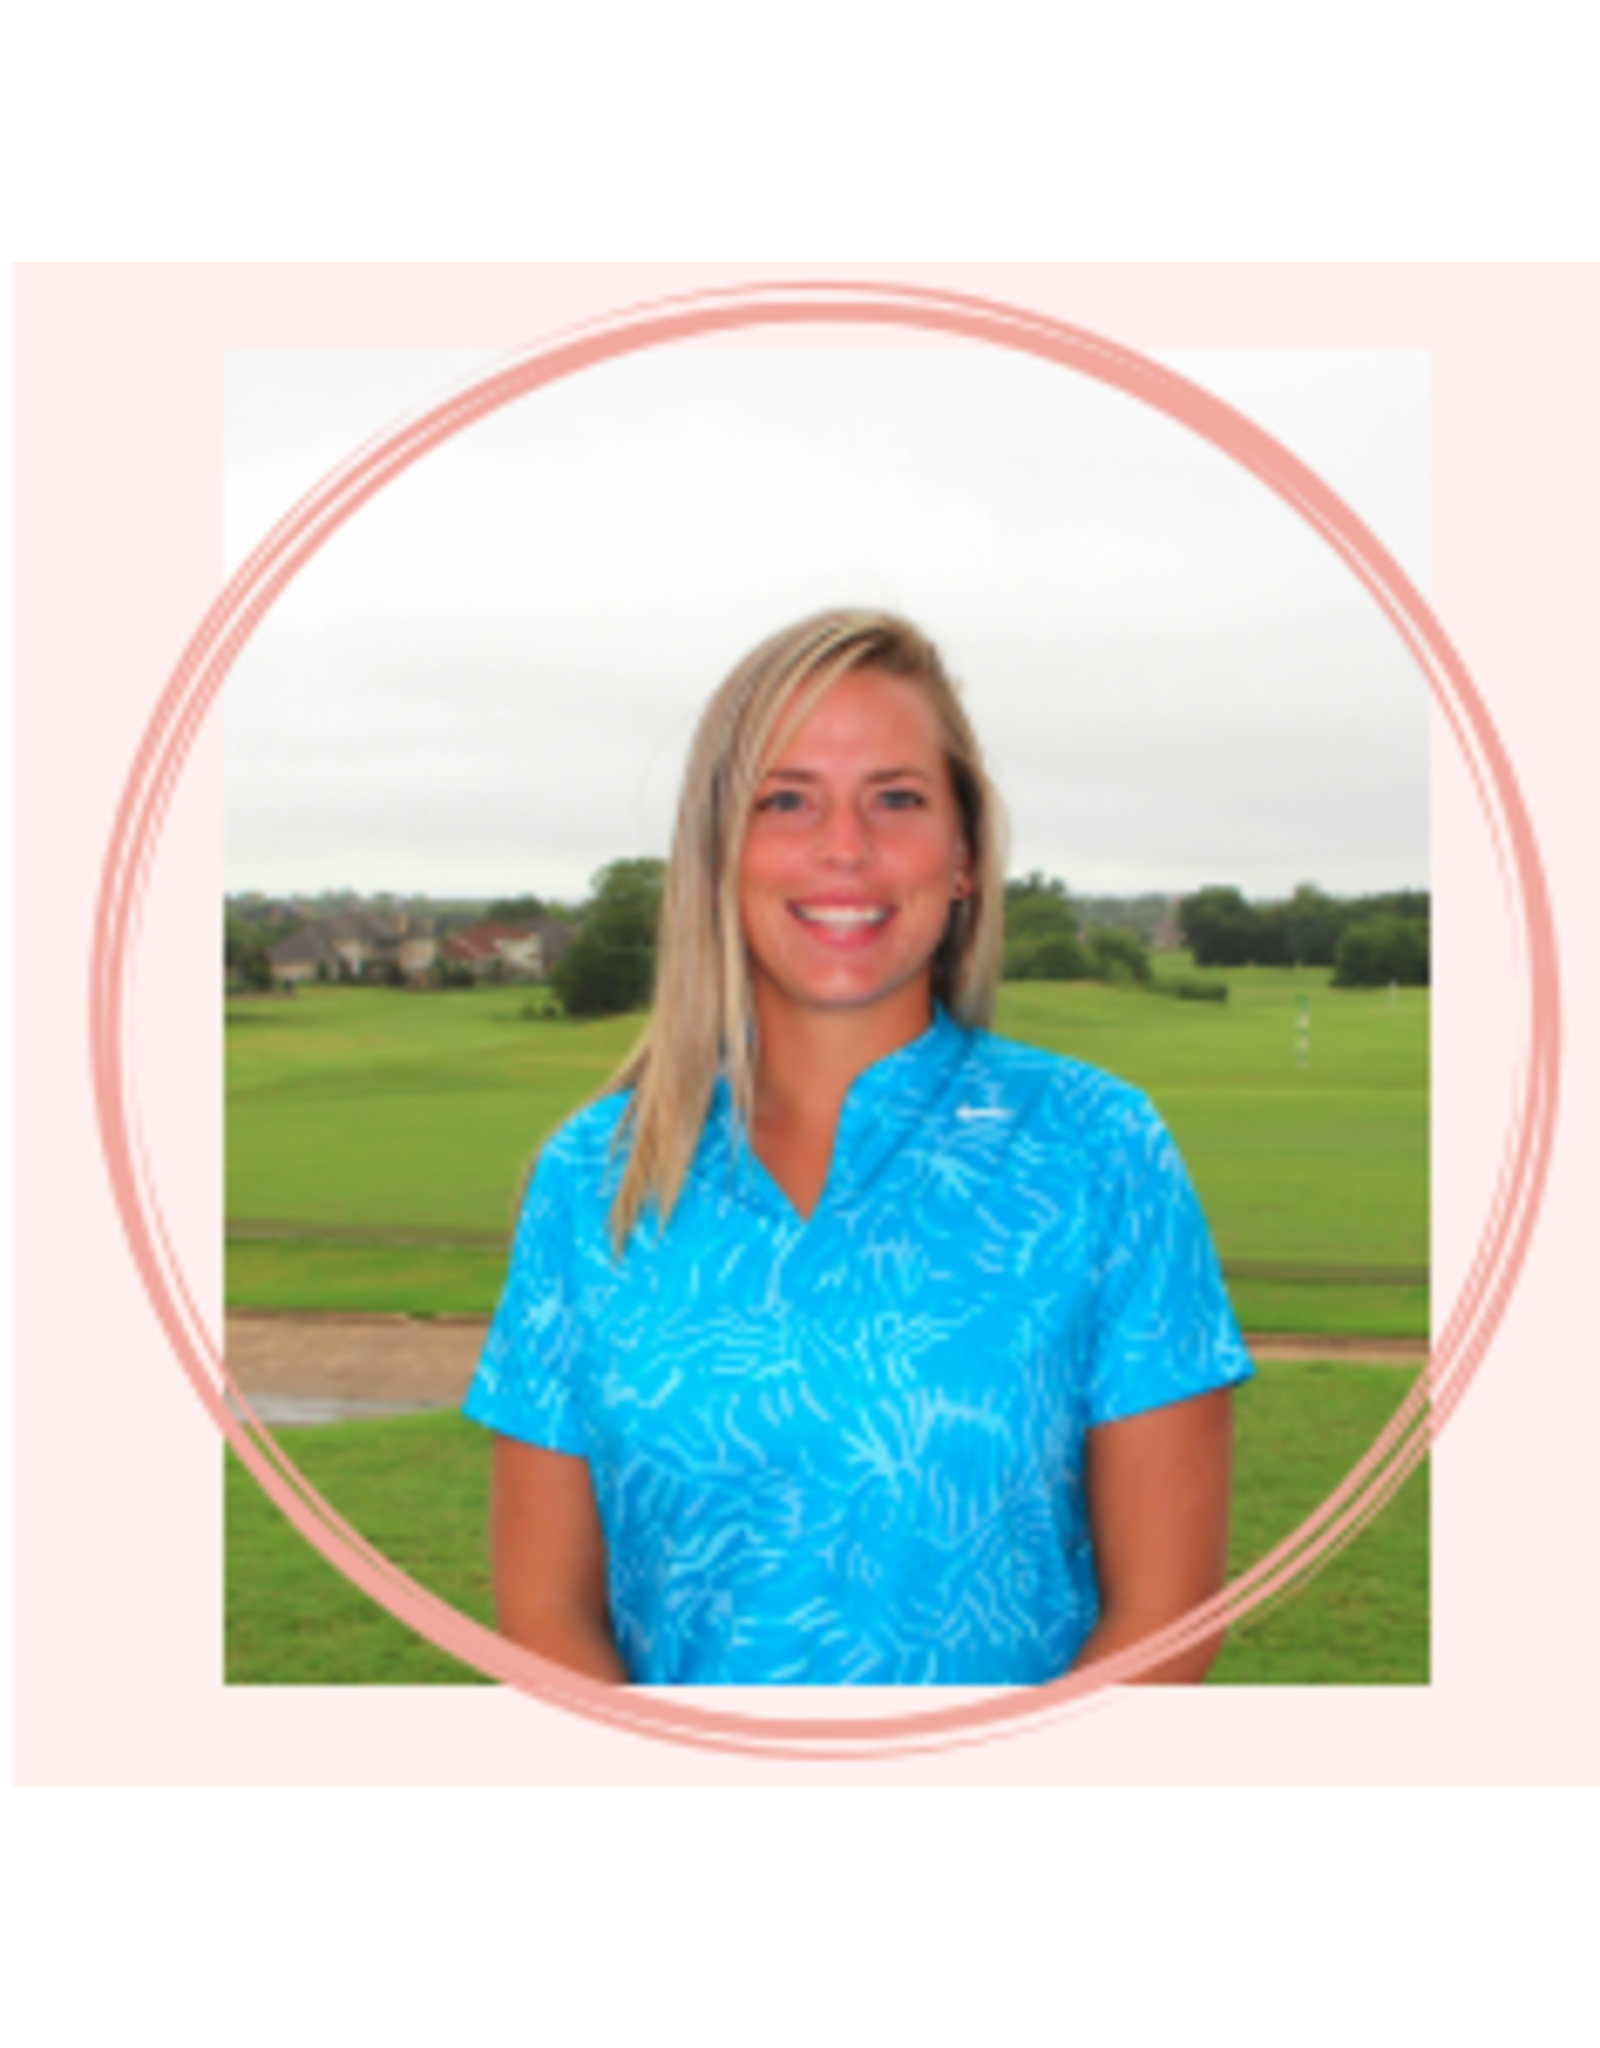 Golf Lessons - Hannah Hughes Golf Lessons - Junior 10 Lesson Pack - Hannah James